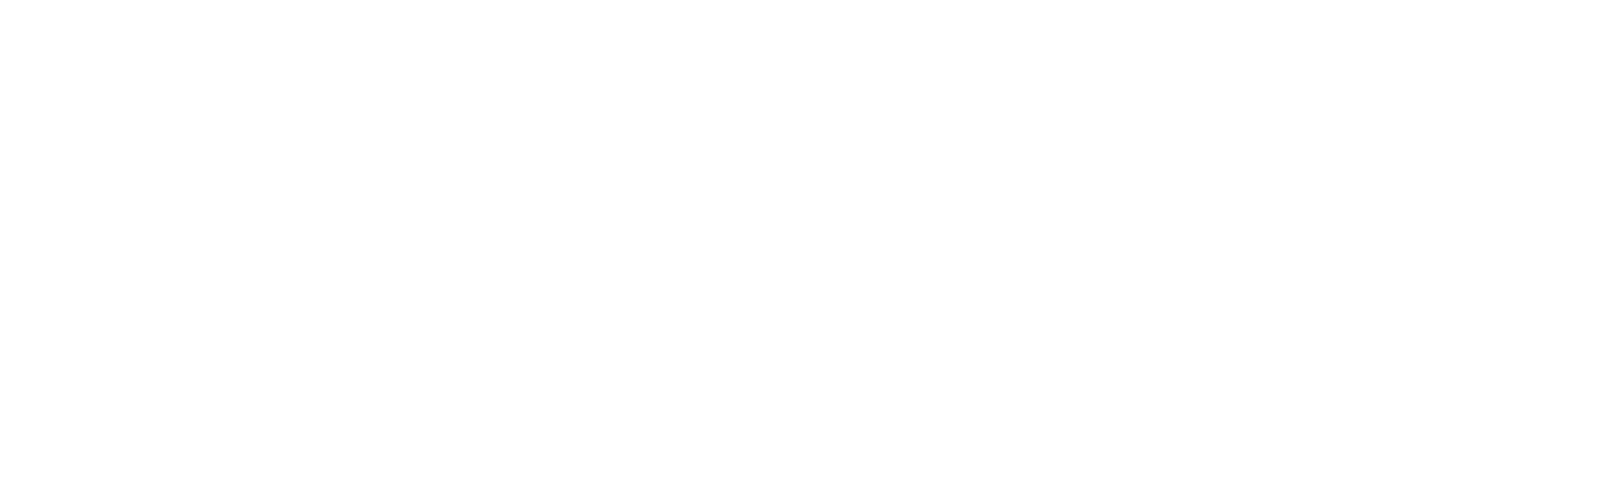 BAE Systems white logo